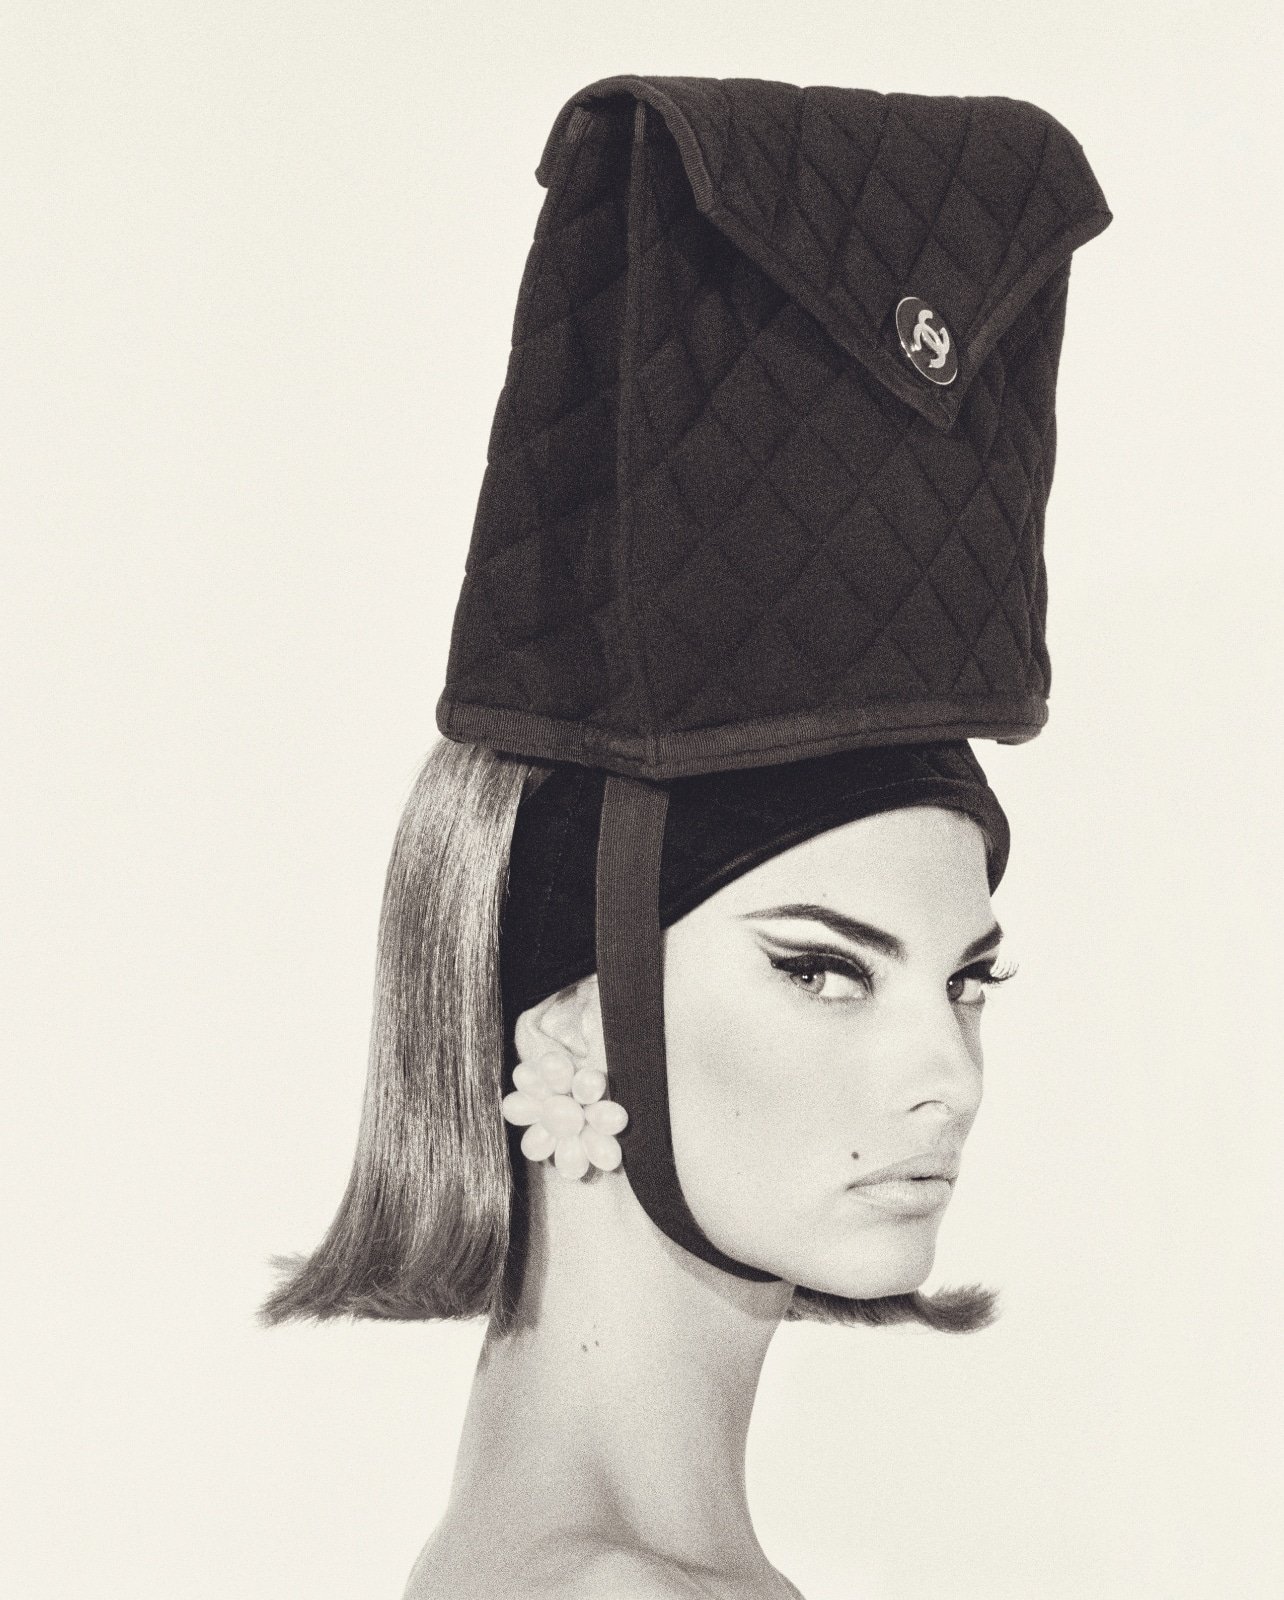 Linda Evangelista posing with vintage Chanel bag